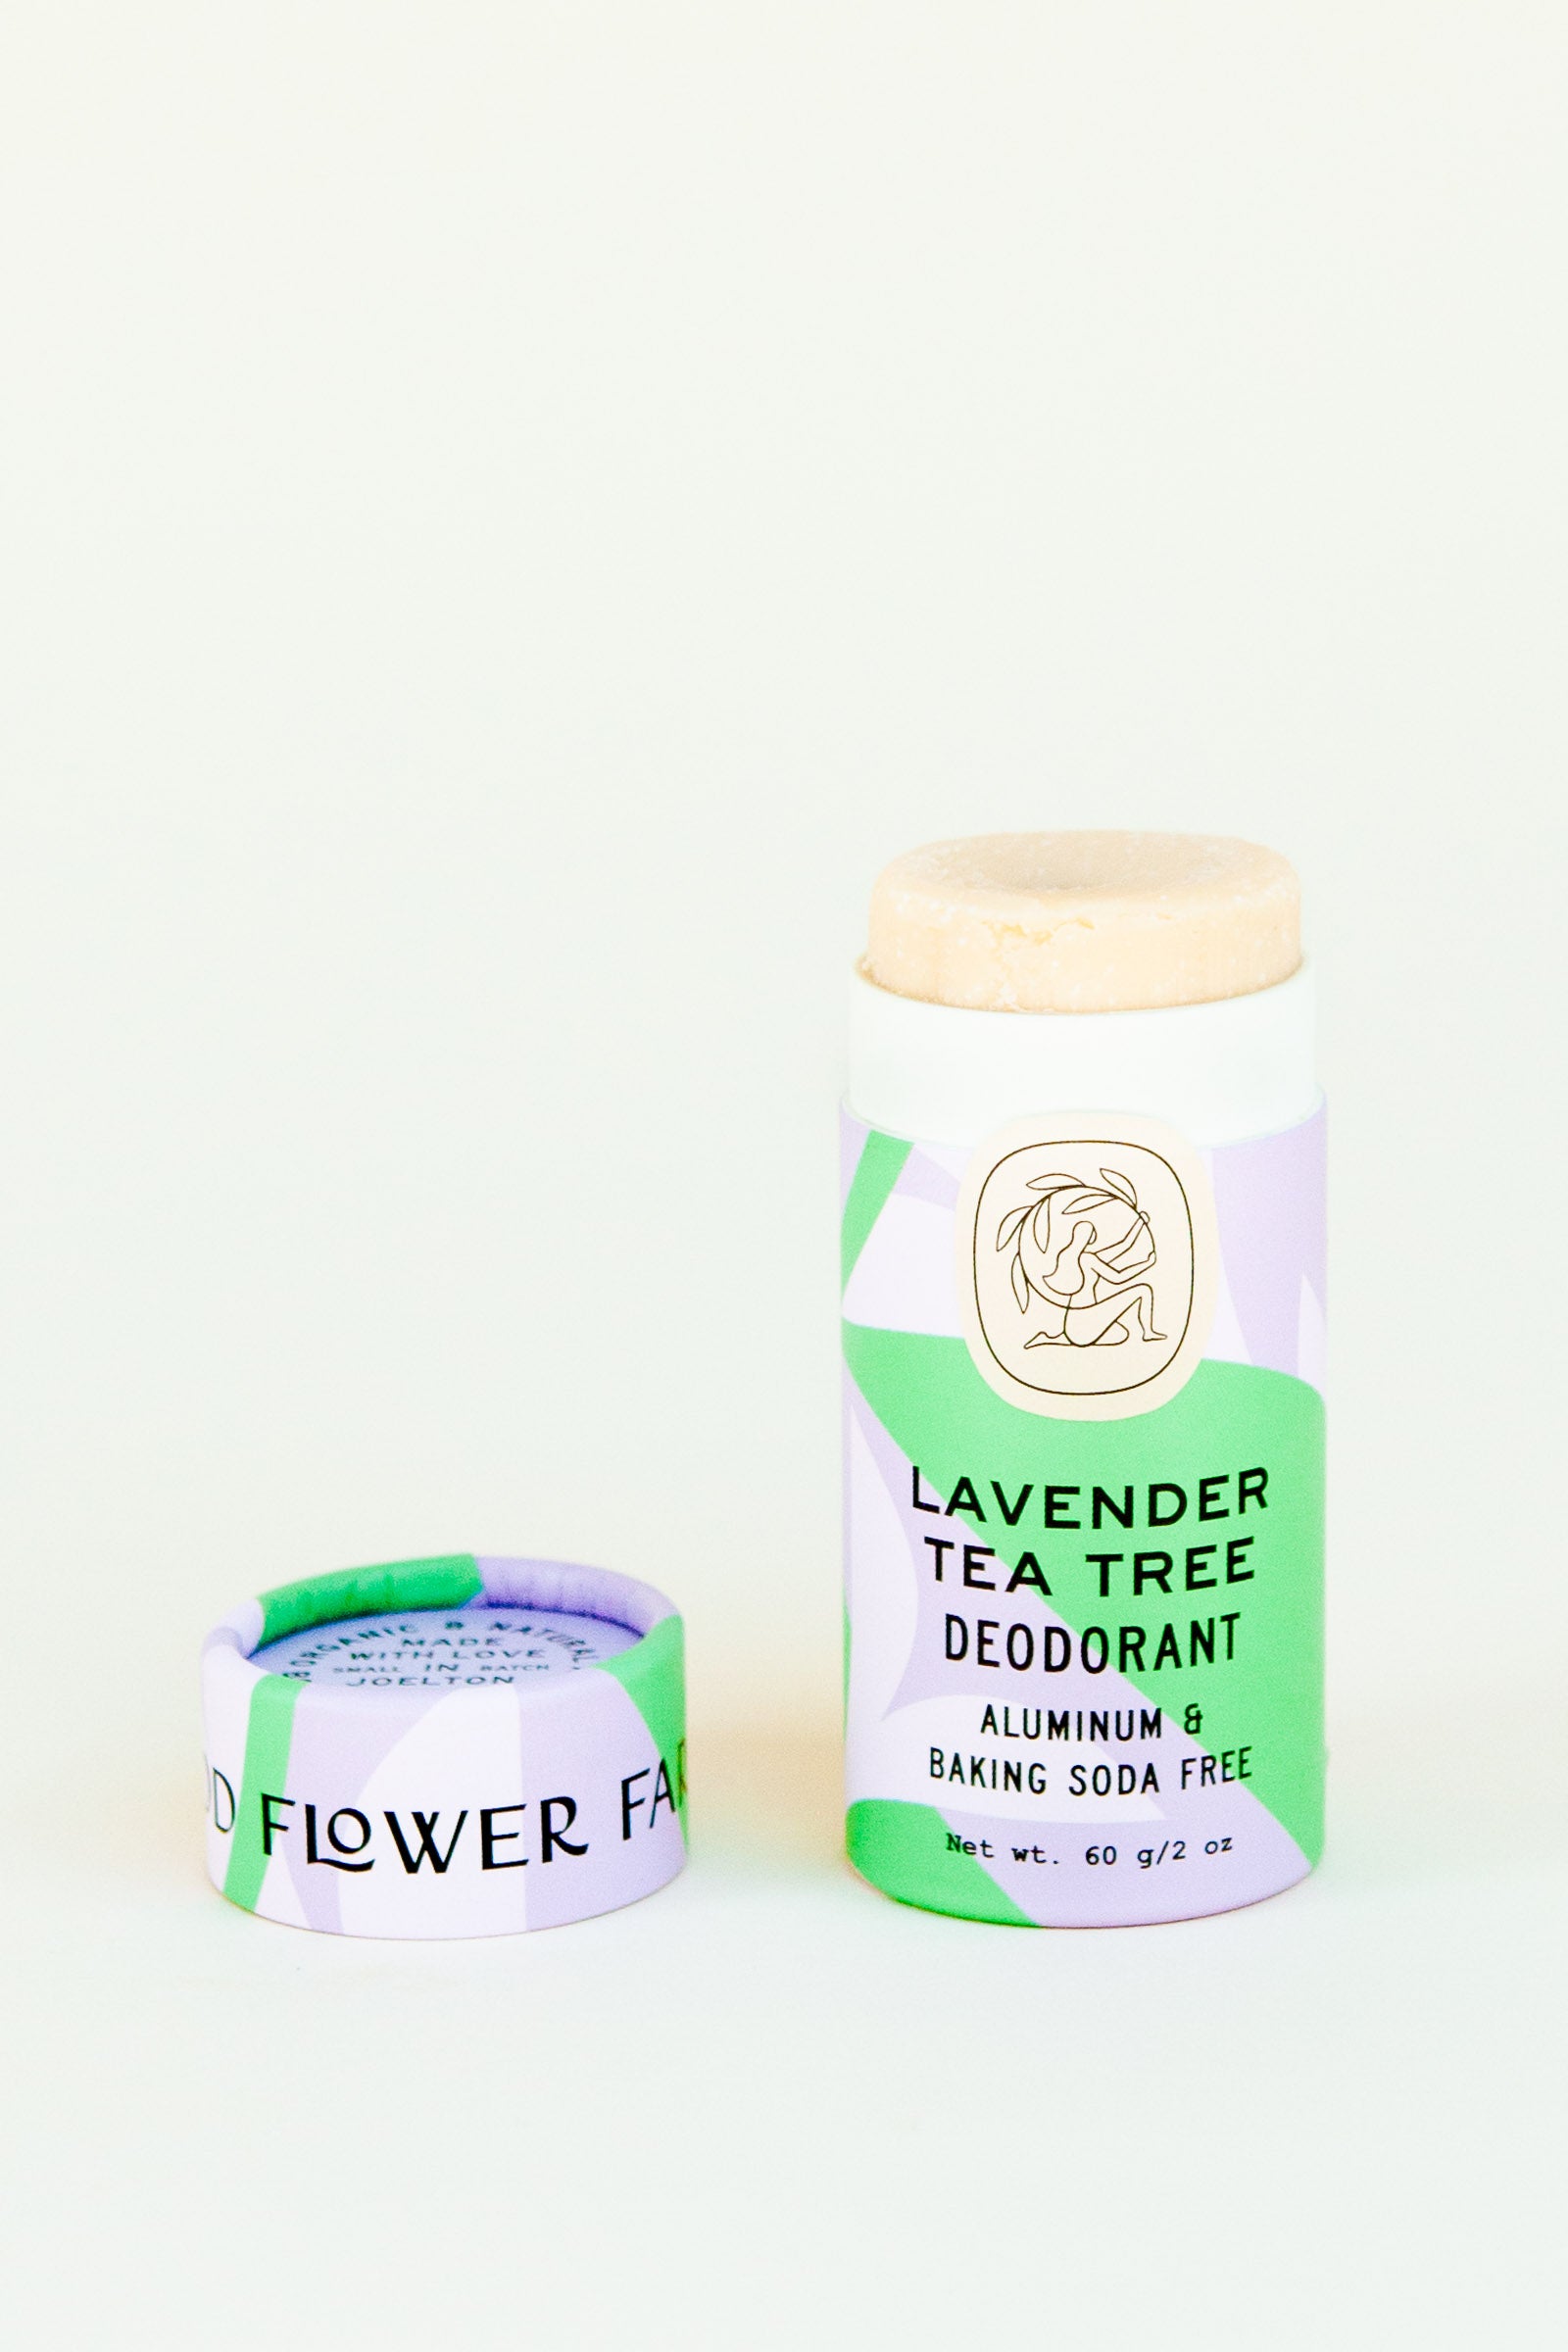 Organic lavender tea tree aluminum & baking soda natural deodorant in biodegradable plastic-free tube by Good Flower Farm